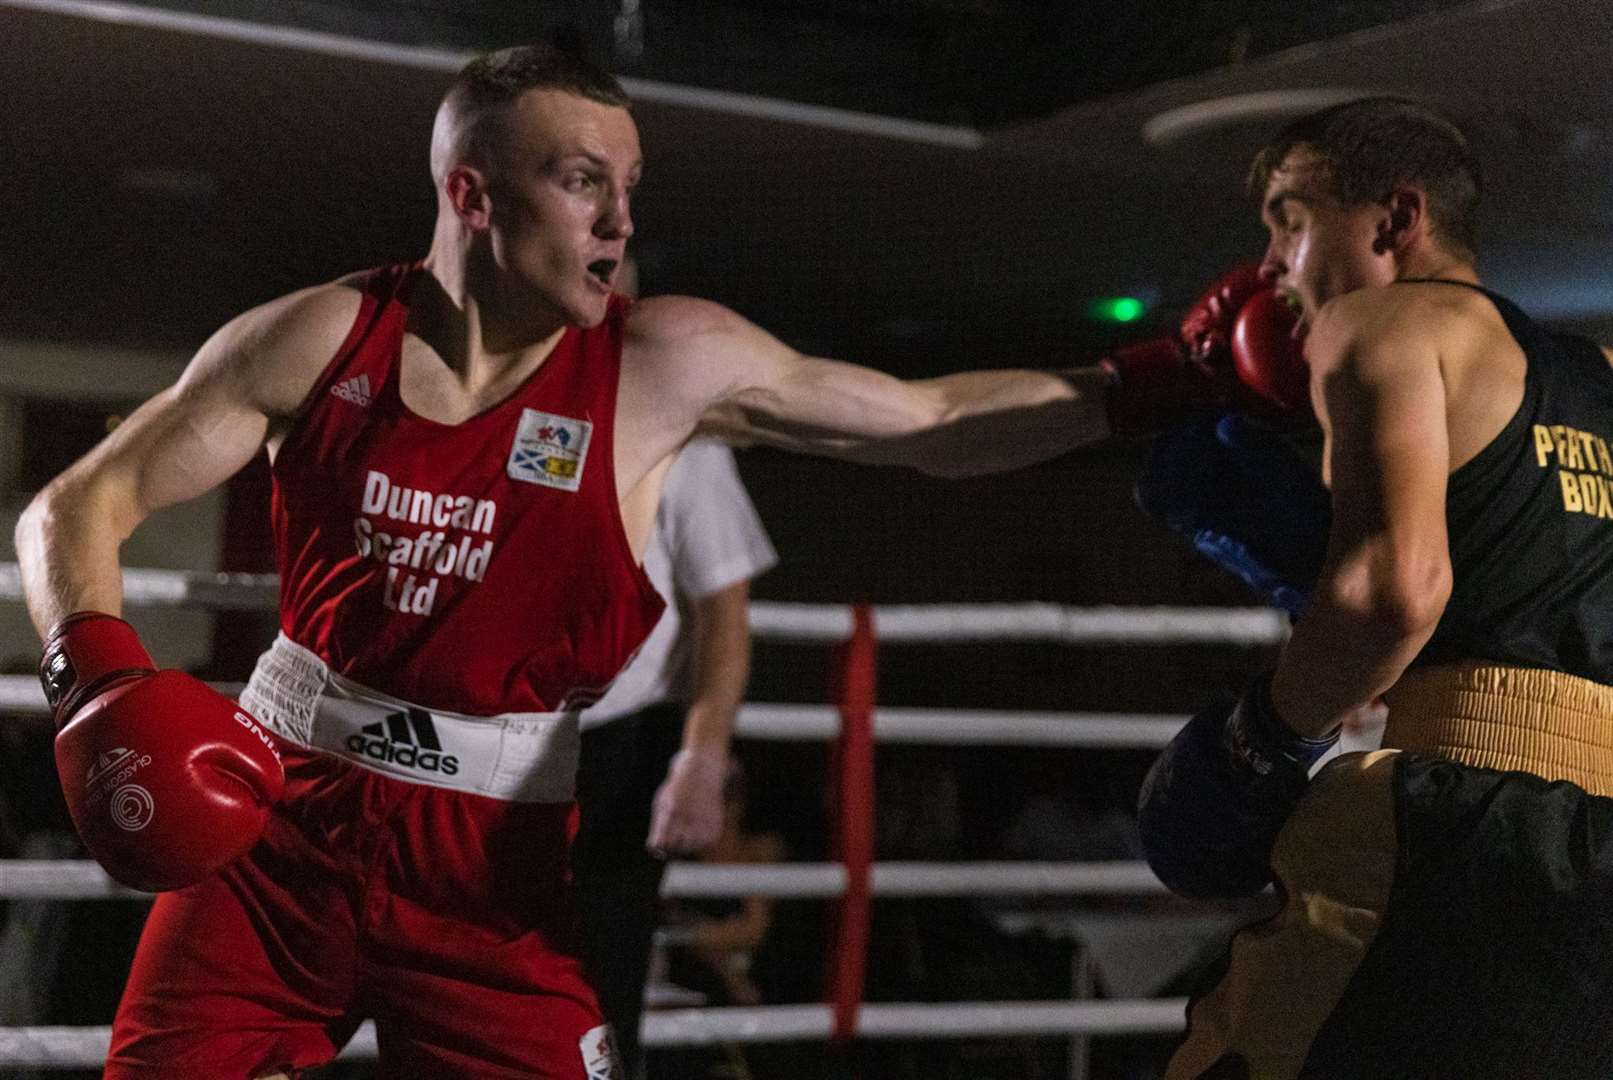 Joe Kinsella boxing his way to a unanimous win against Perth railways Justin Mortin.